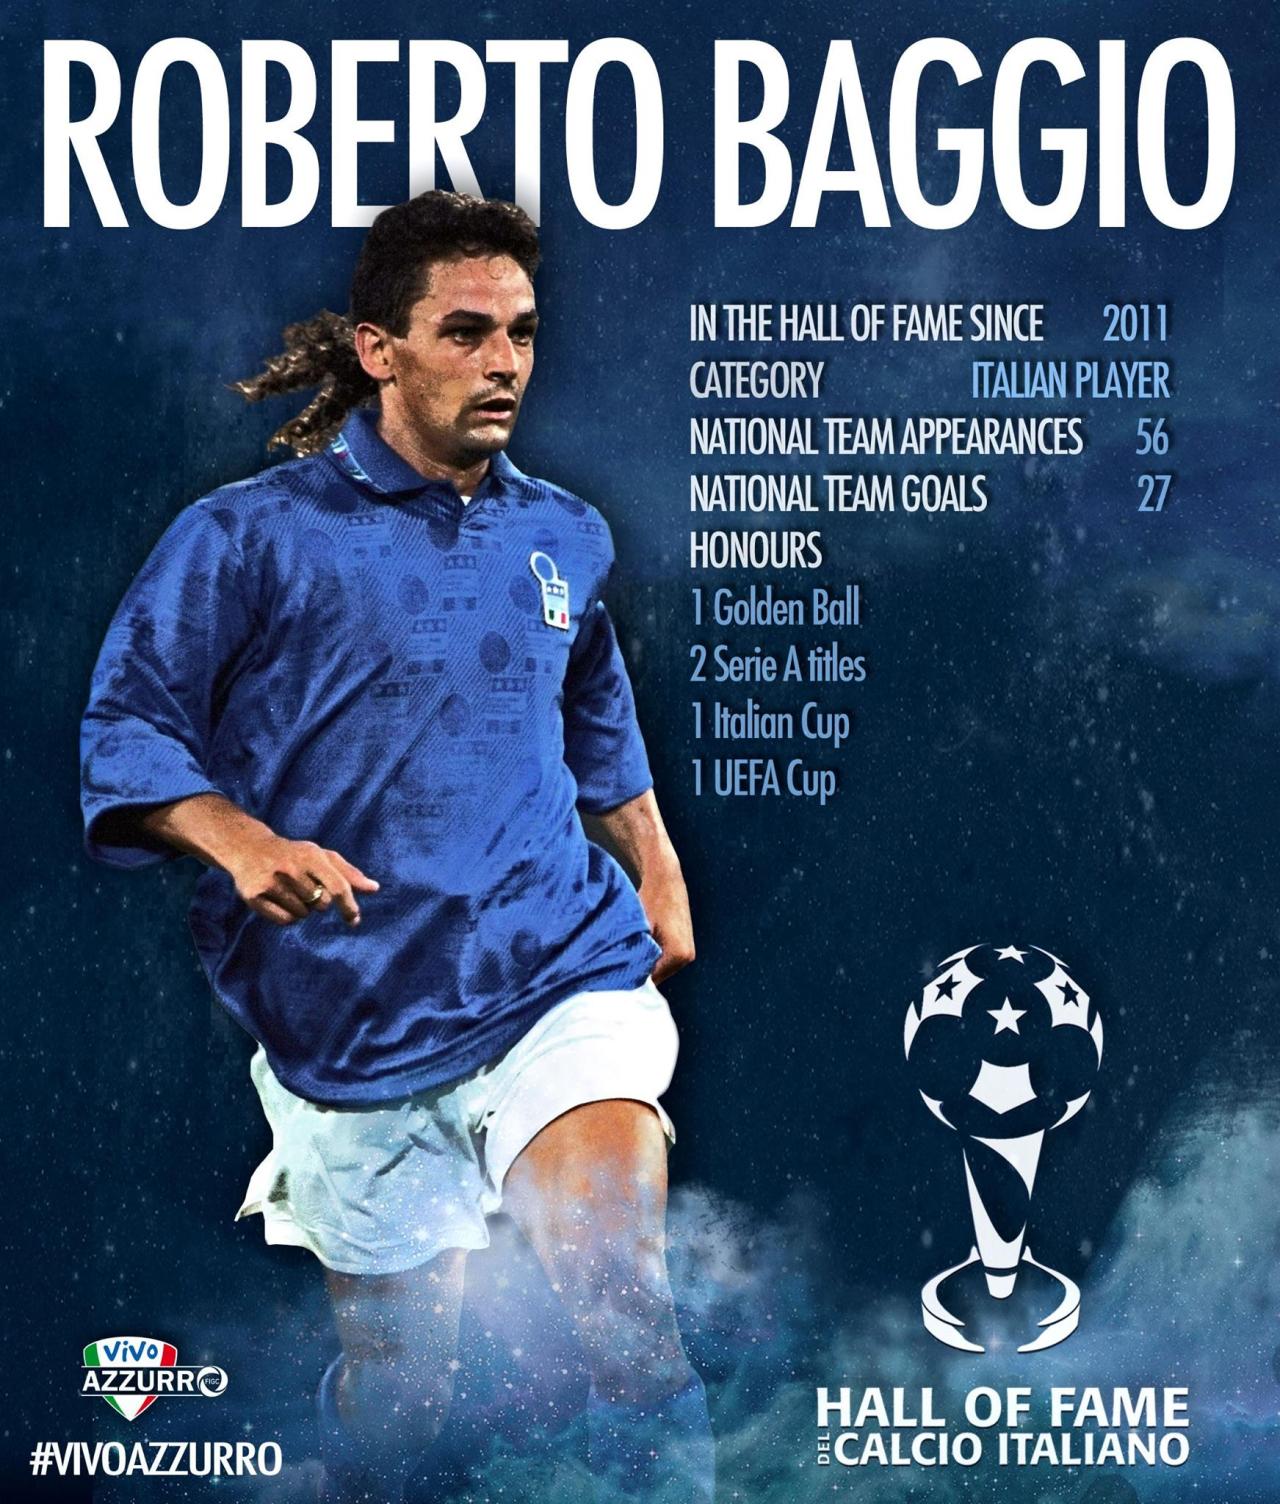 Roberto Baggio - Страница 5 Tumblr_n9tgsxjixA1r90nv2o1_1280